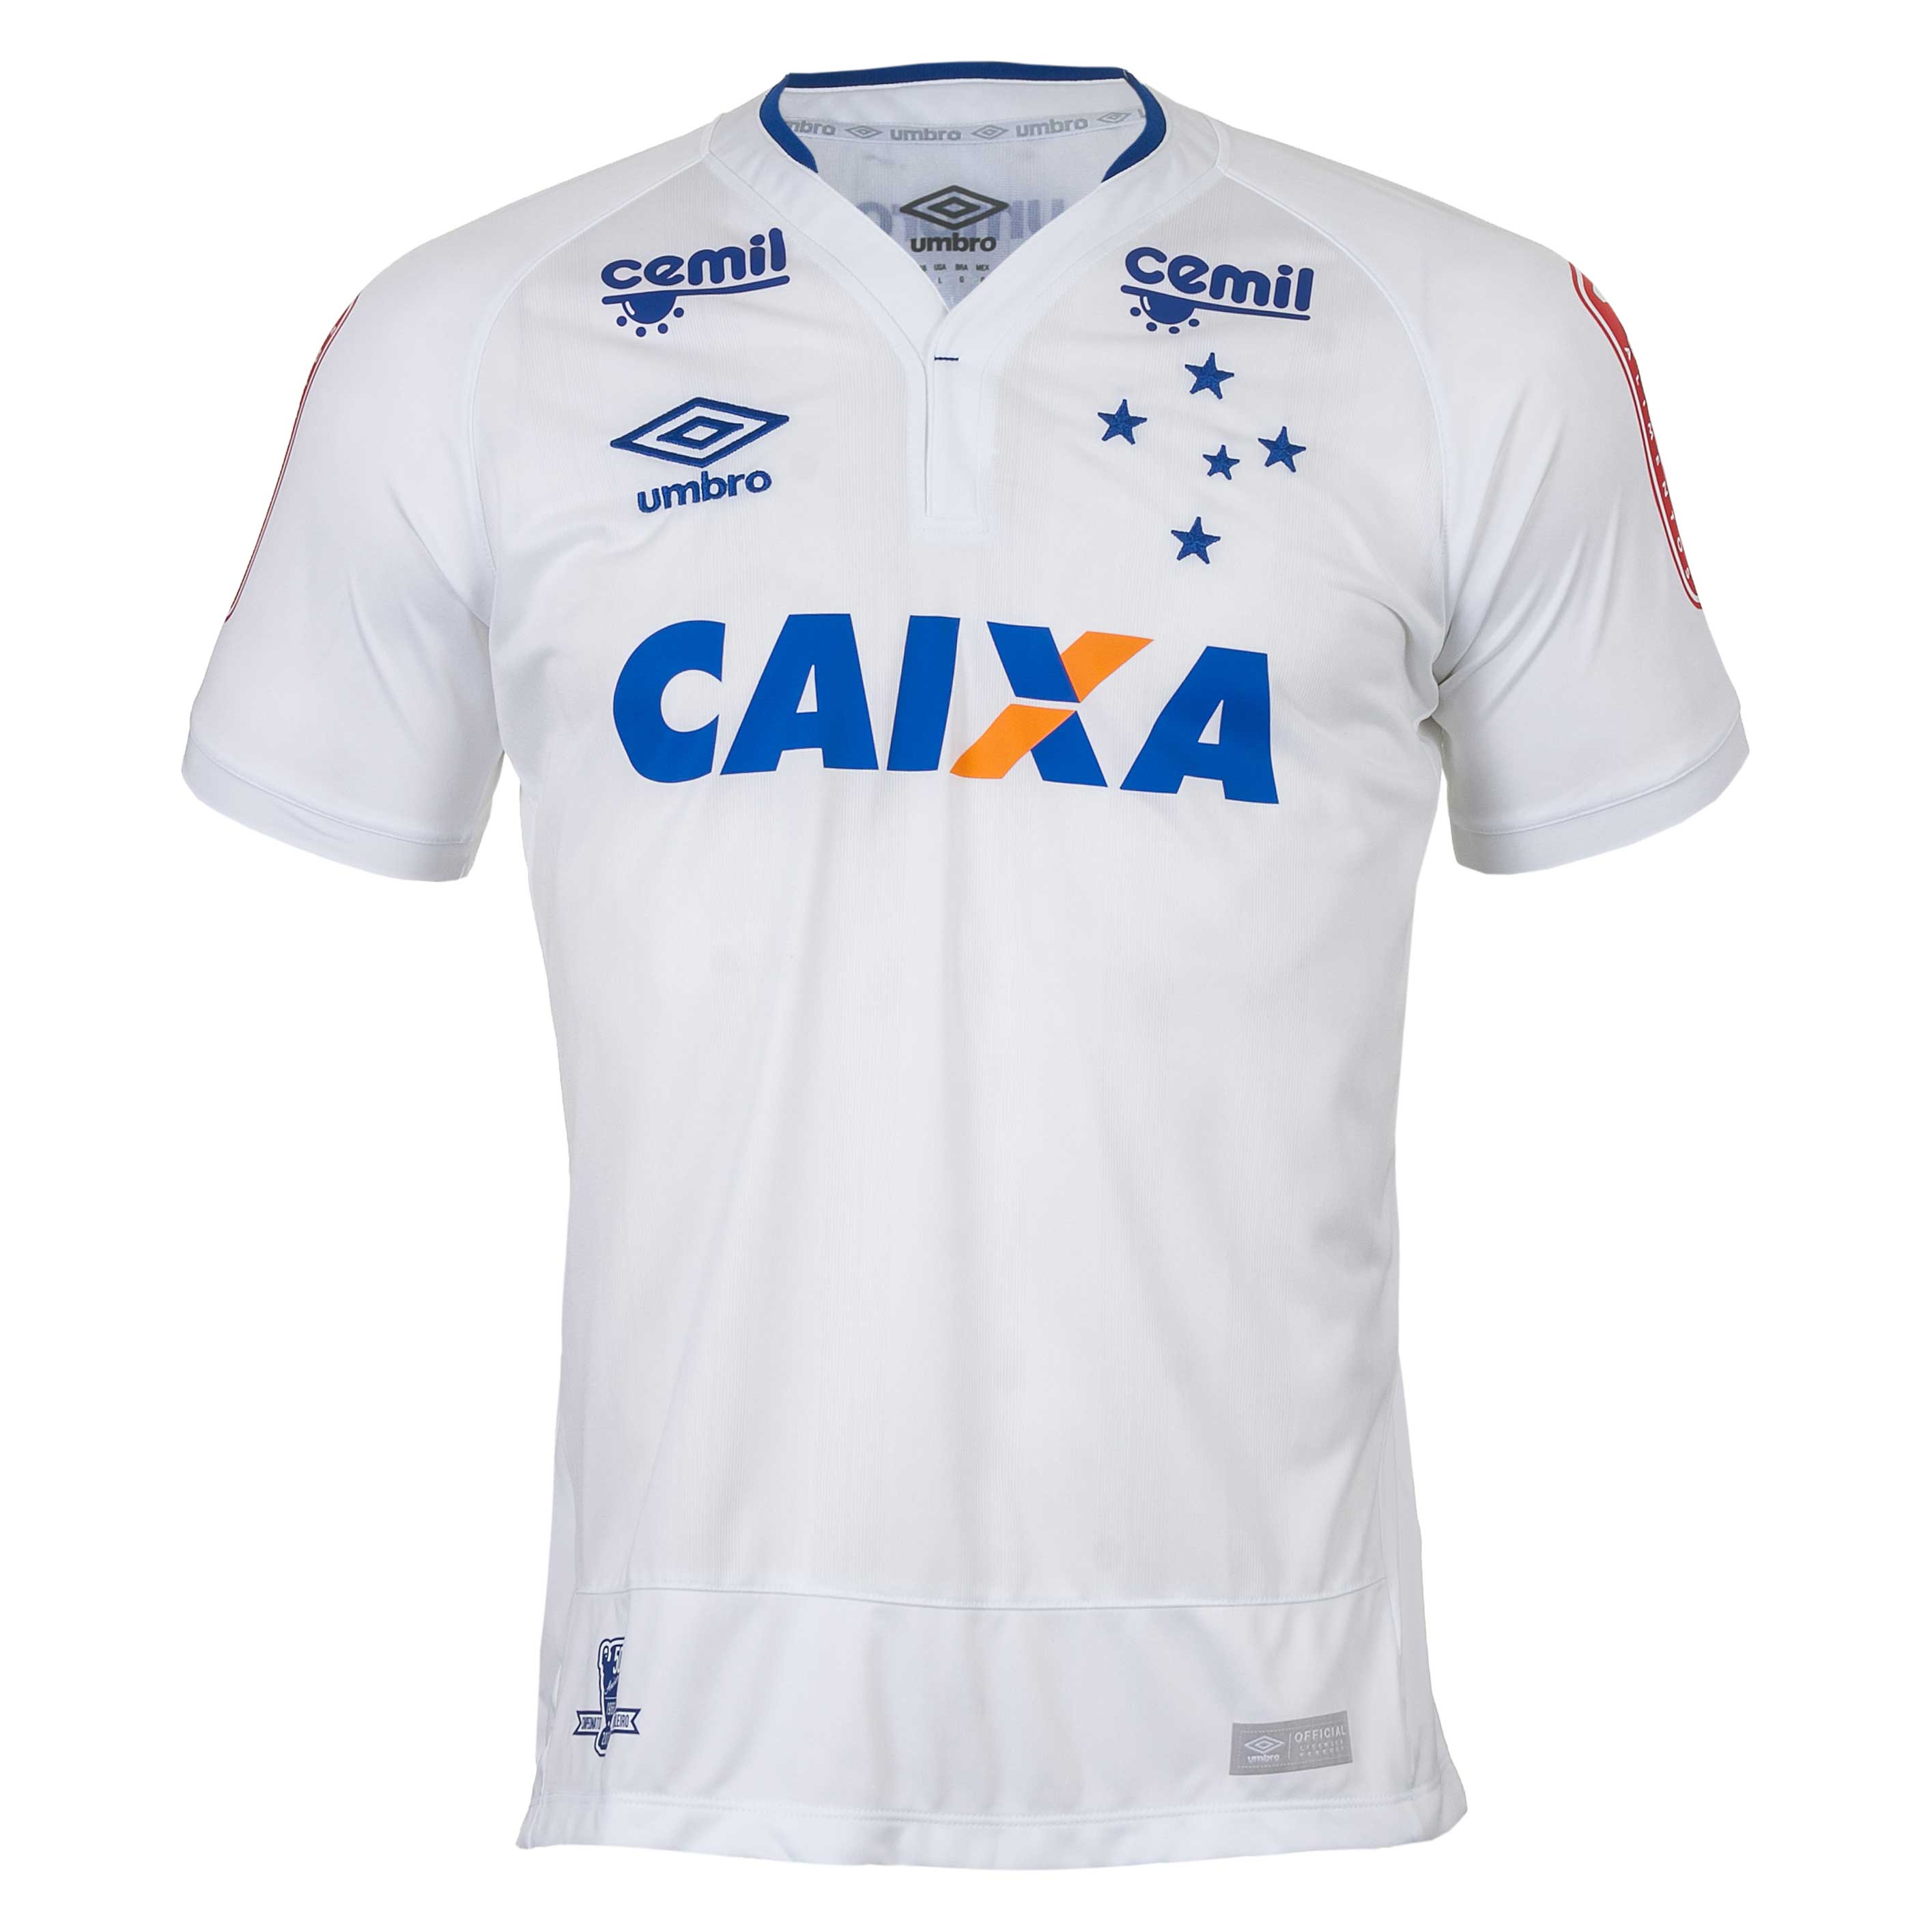 Camiseta Masc. Umbro Cruzeiro Of 2 - Branco/Azul